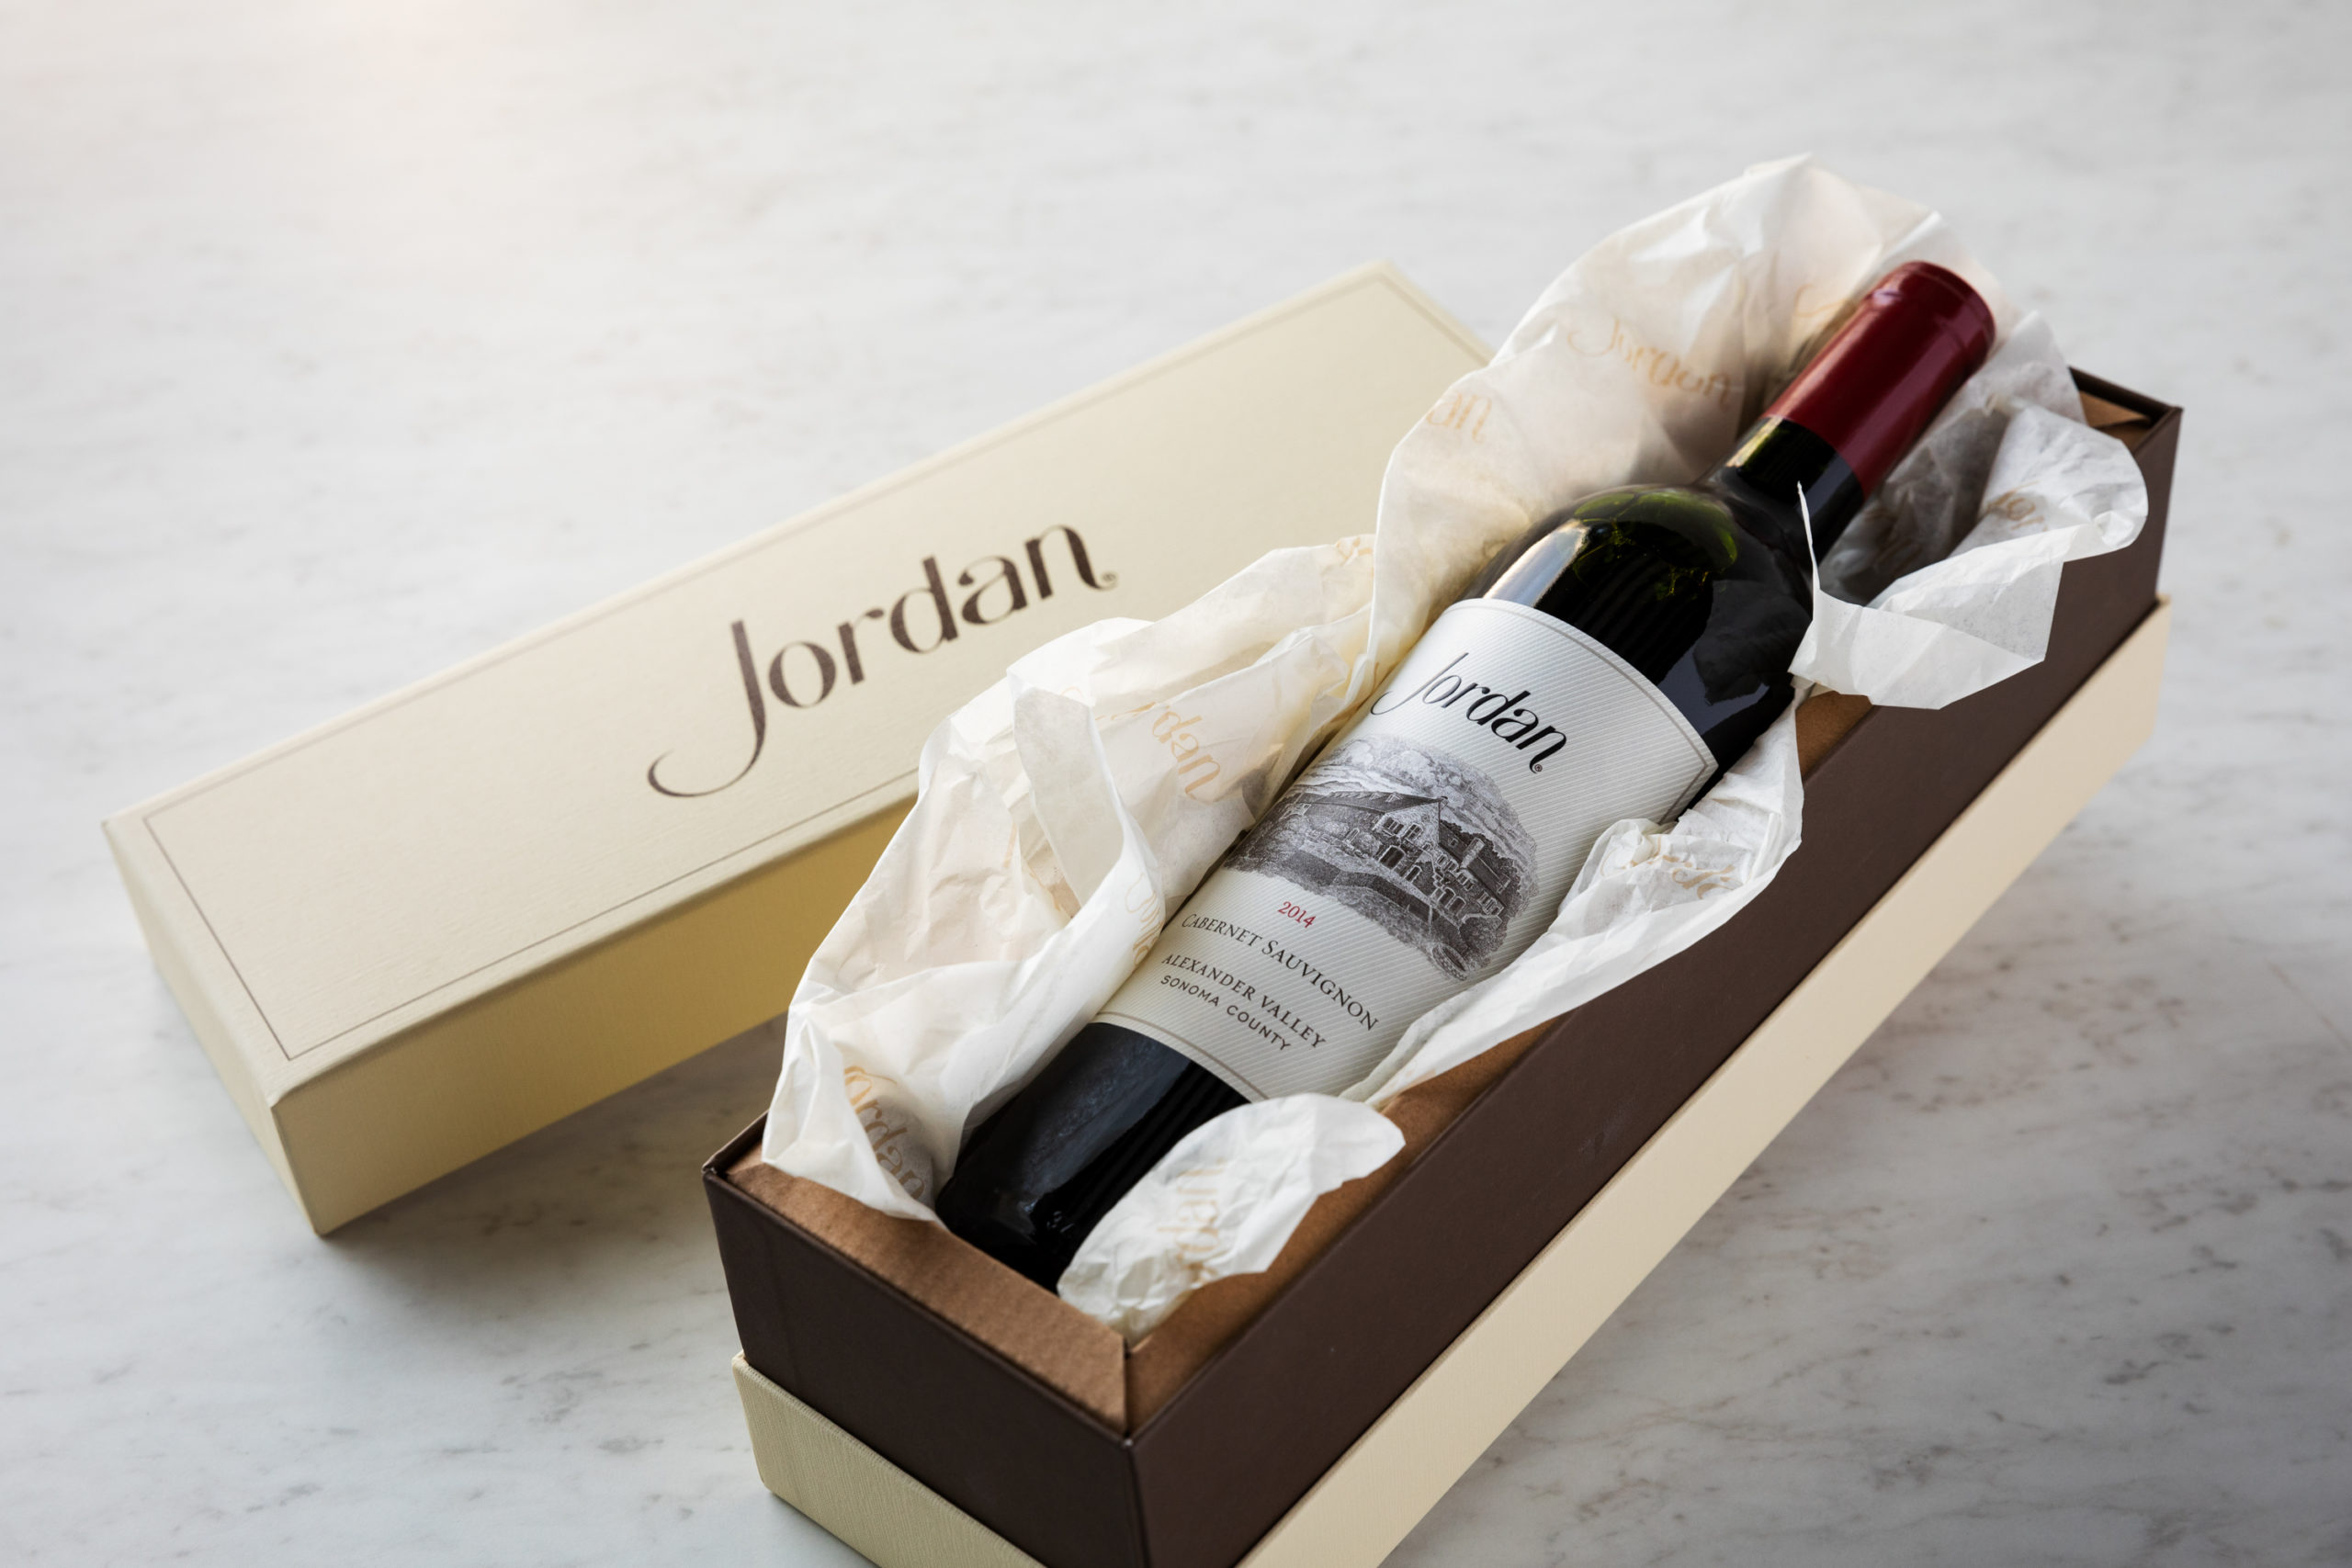 Gift set with Jordan Cabernet Sauvignon in box